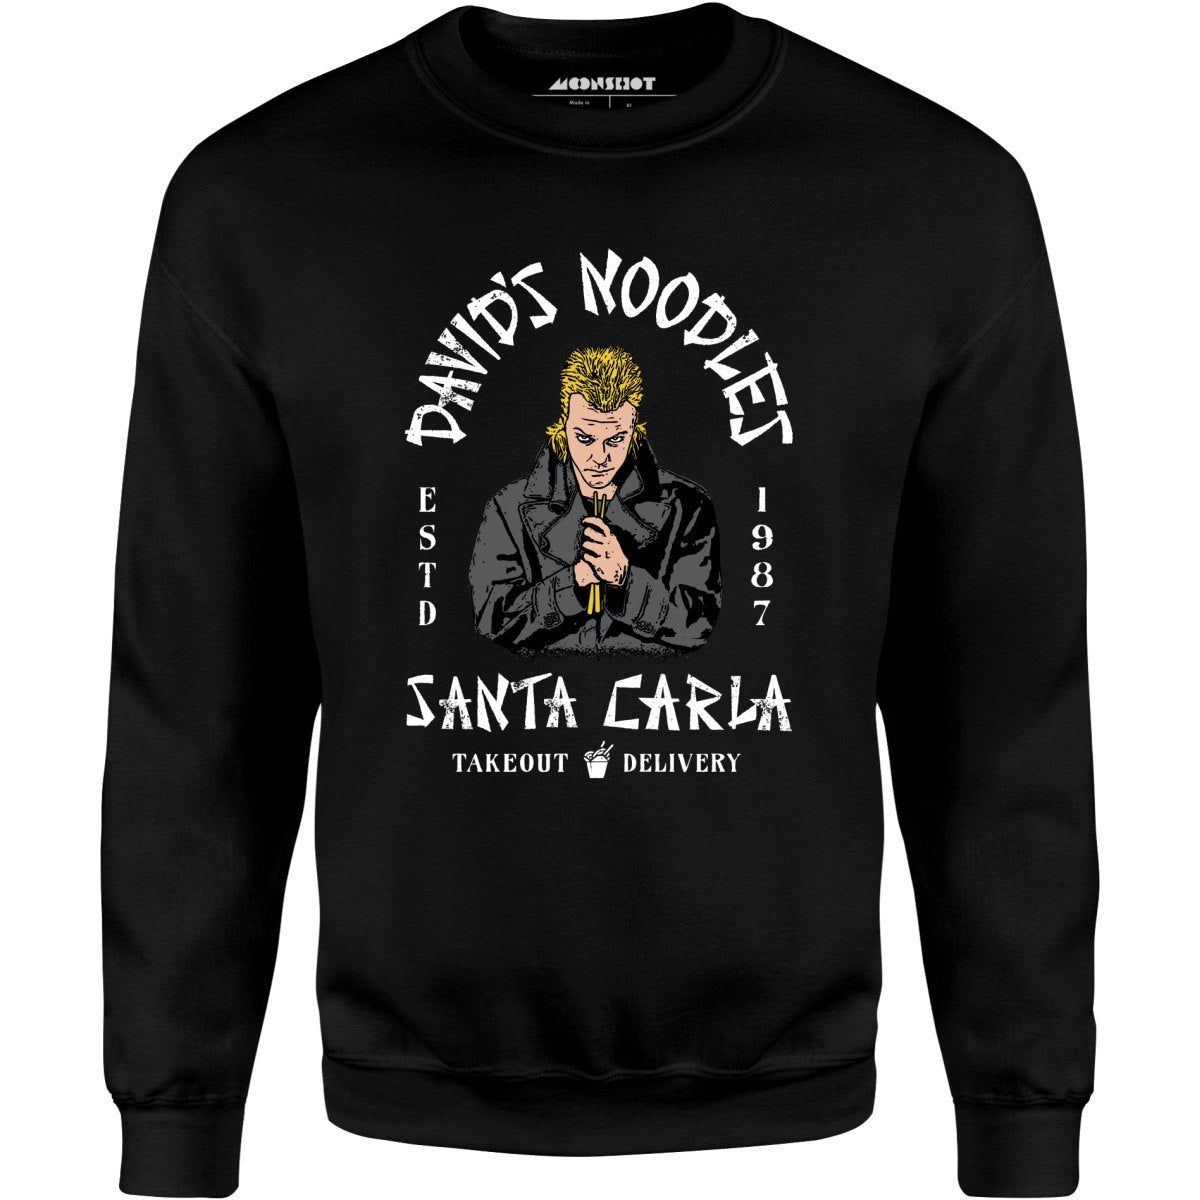 David's Noodles - Takeout & Delivery - Unisex Sweatshirt